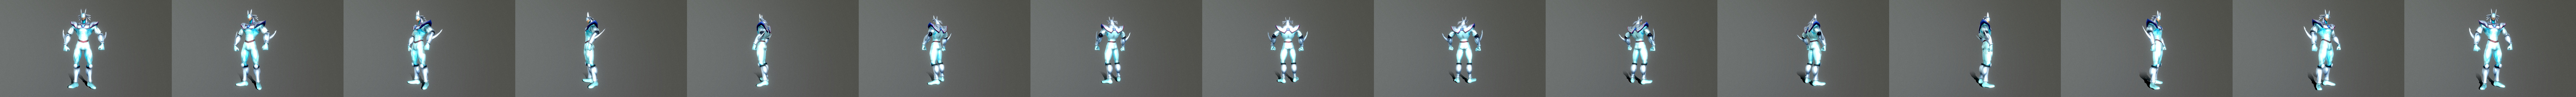 elemental hero glow neos